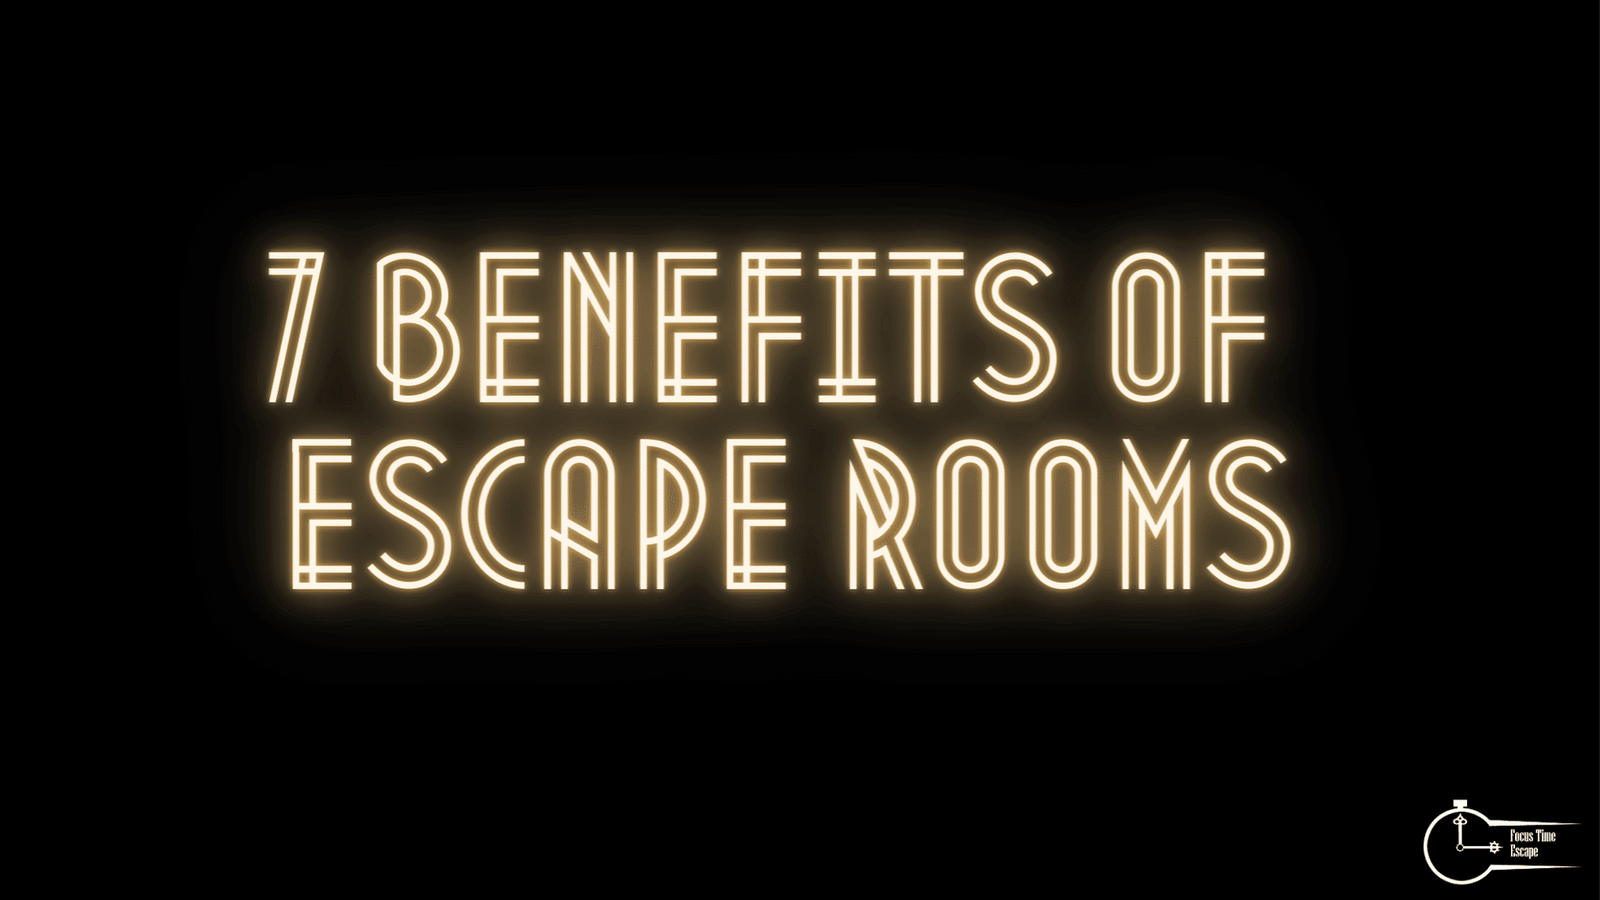 7 Benefits of Escape Rooms